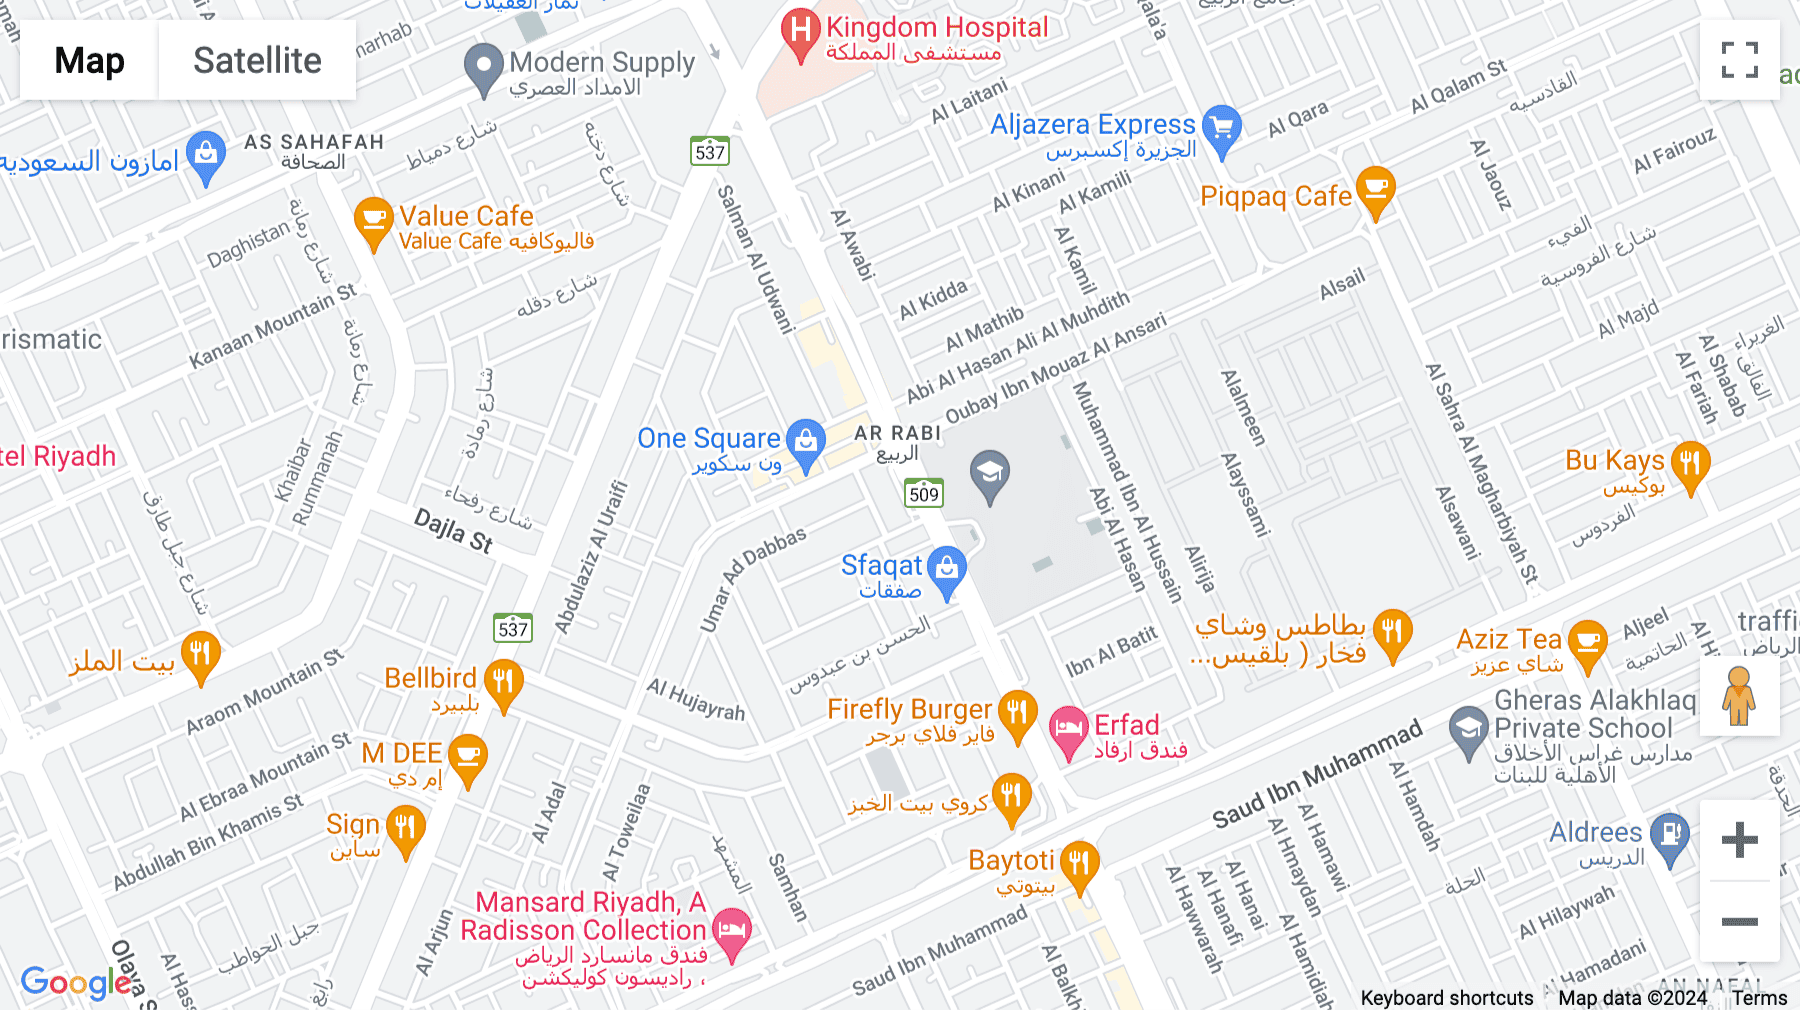 Click for interative map of Spring Plaza,2nd floor, King Abdulaziz Road, Arrabi area,, Riyadh